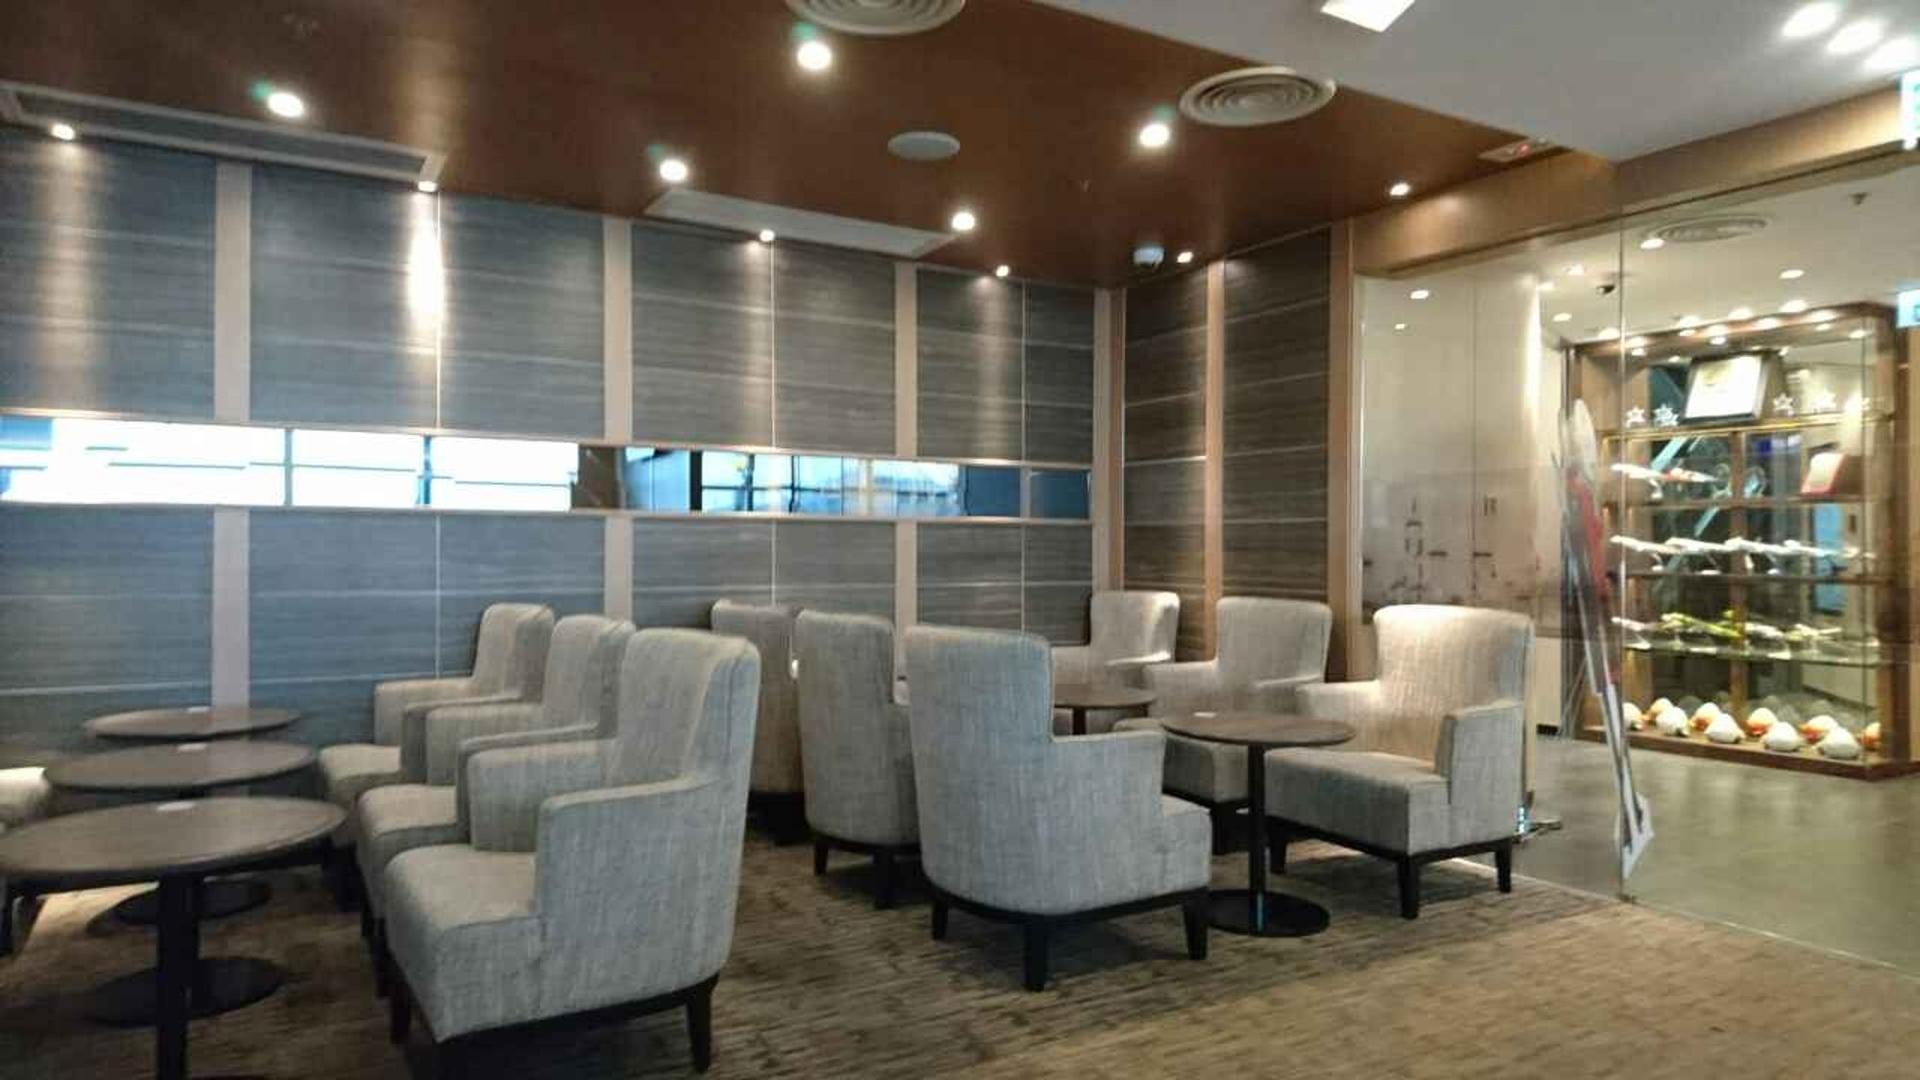 Hong Kong Airlines VIP Lounge (Club Bauhinia) image 14 of 40